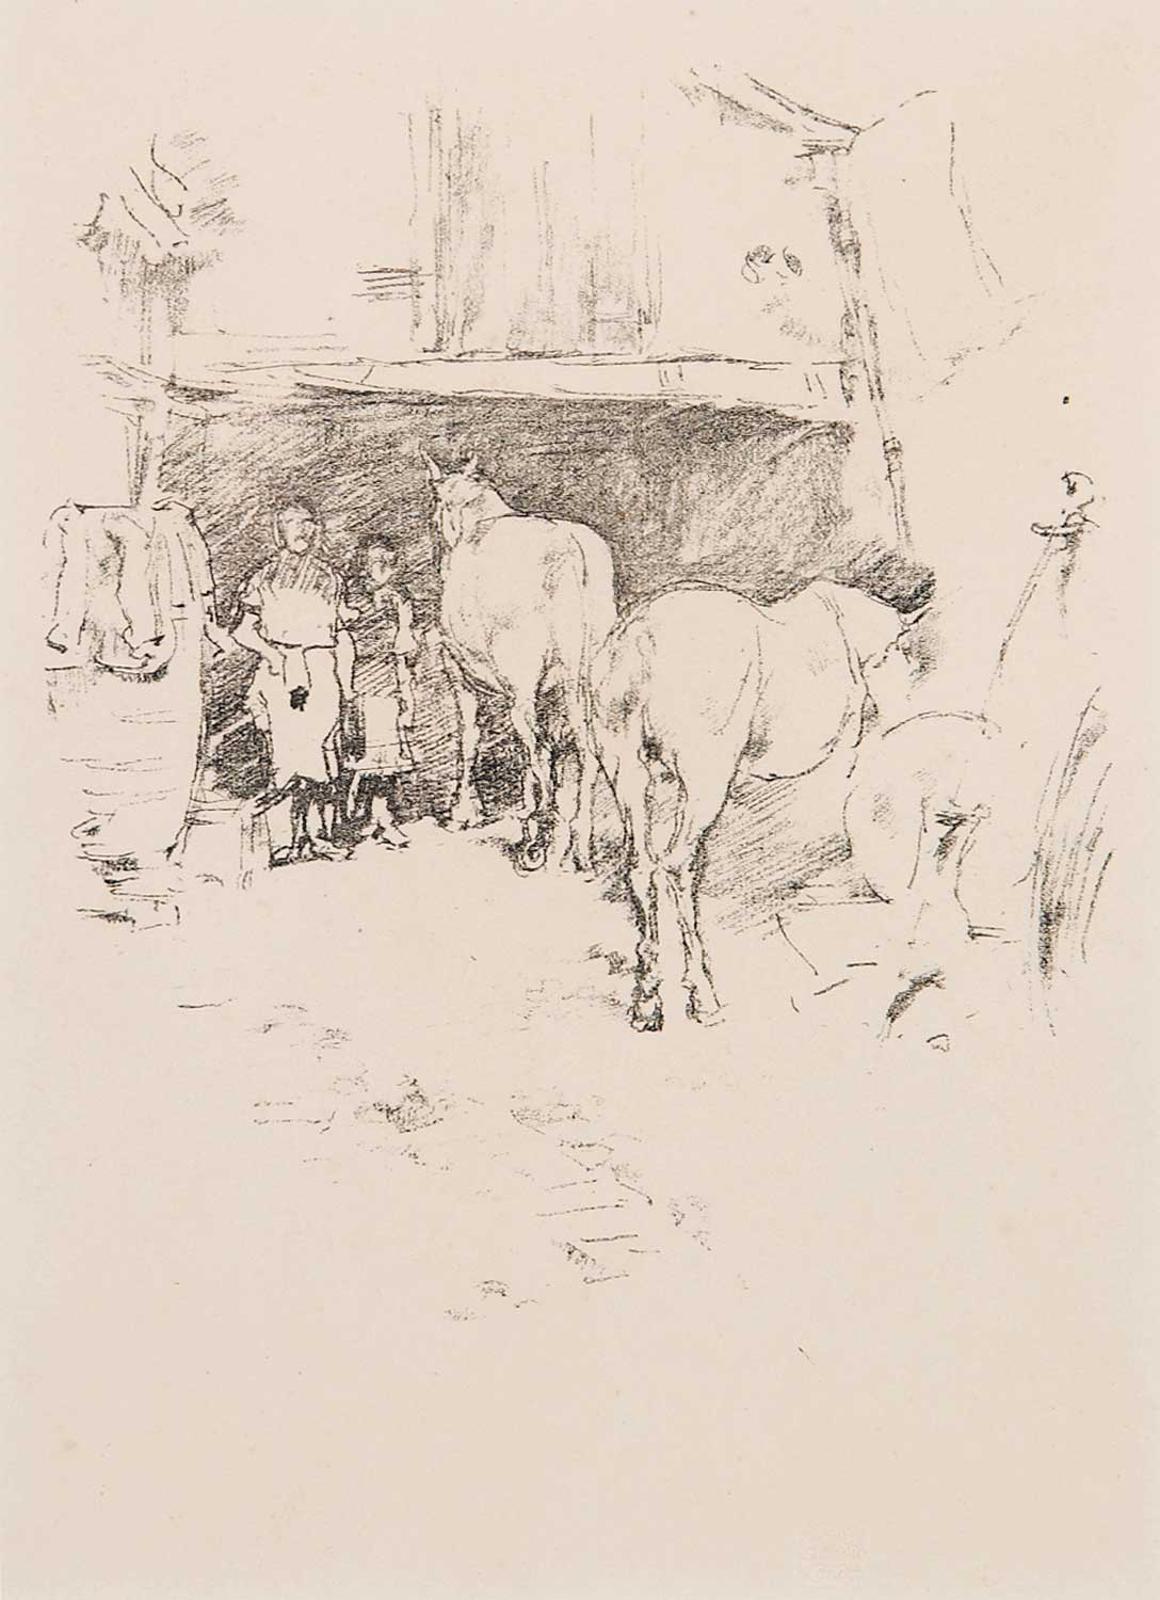 James Abbott McNeill Whistler (1834-1903) - The Smith's Yard